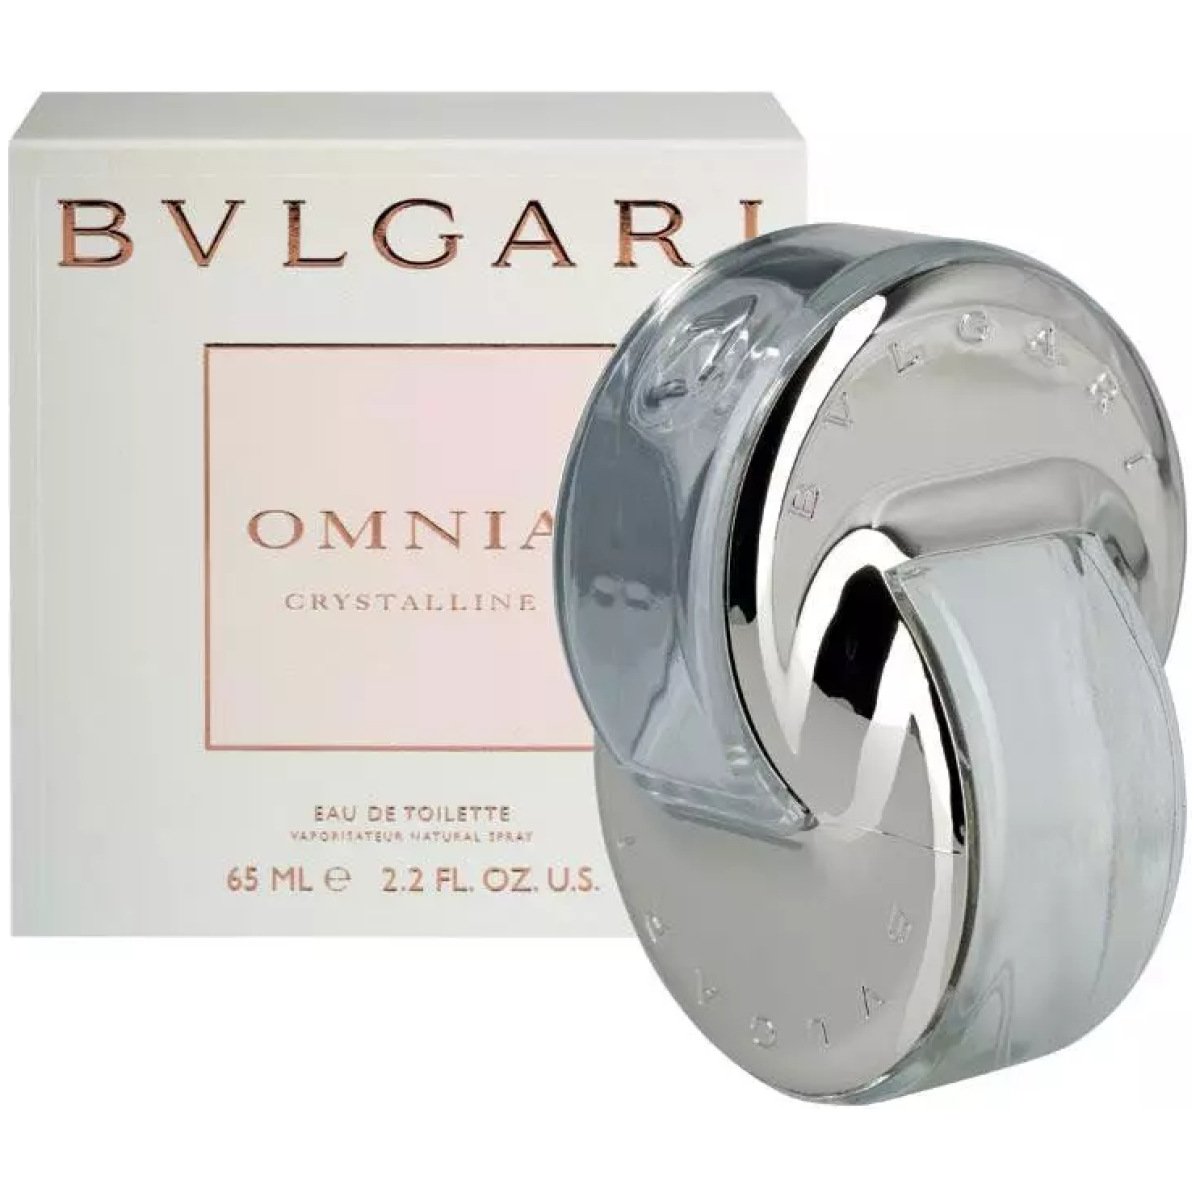 Bvlgari Omnia Crystalline EDT Perfume For Women 65ml